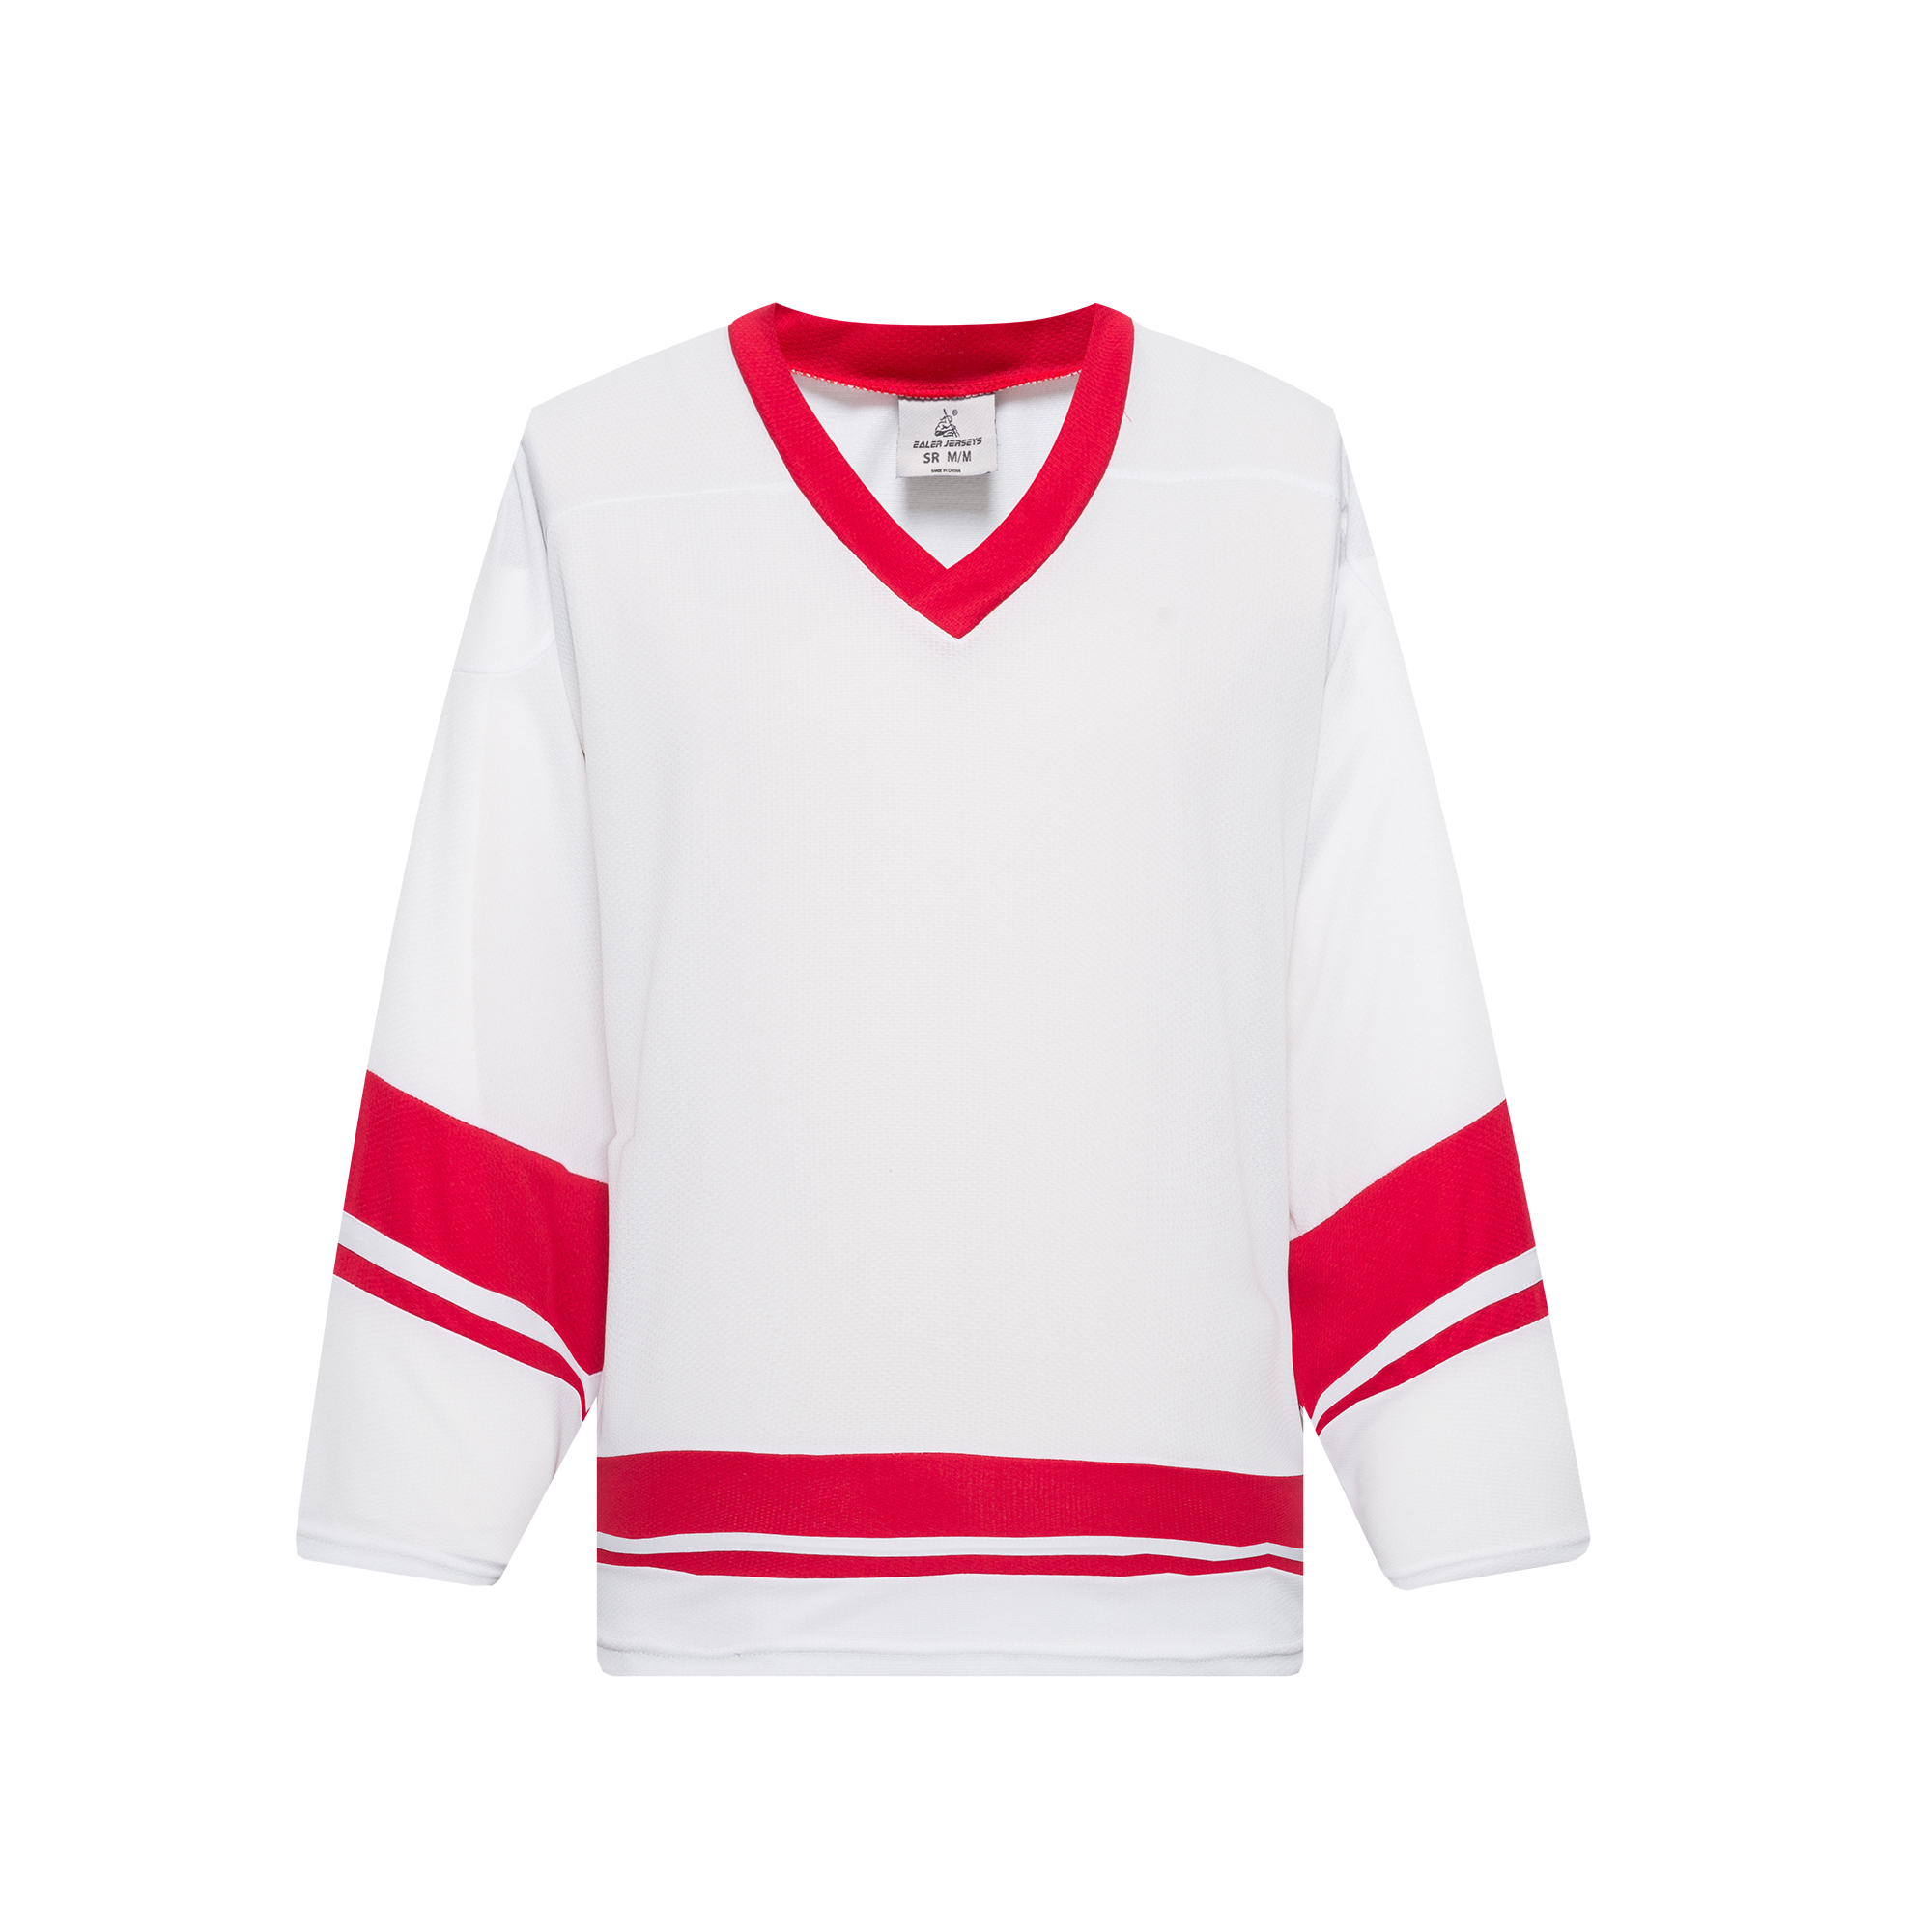 Cheap Custom Red Gold-White Hockey Jersey Free Shipping – CustomJerseysPro